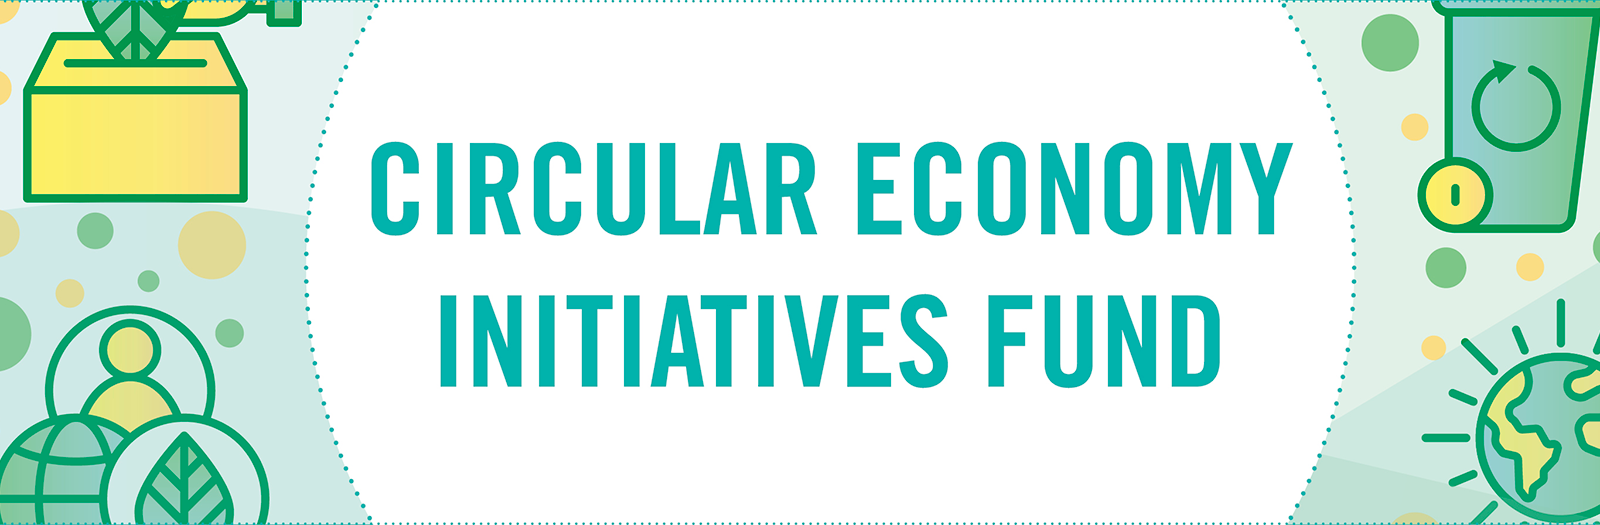 Circular Economy Initiatives Fund Banner